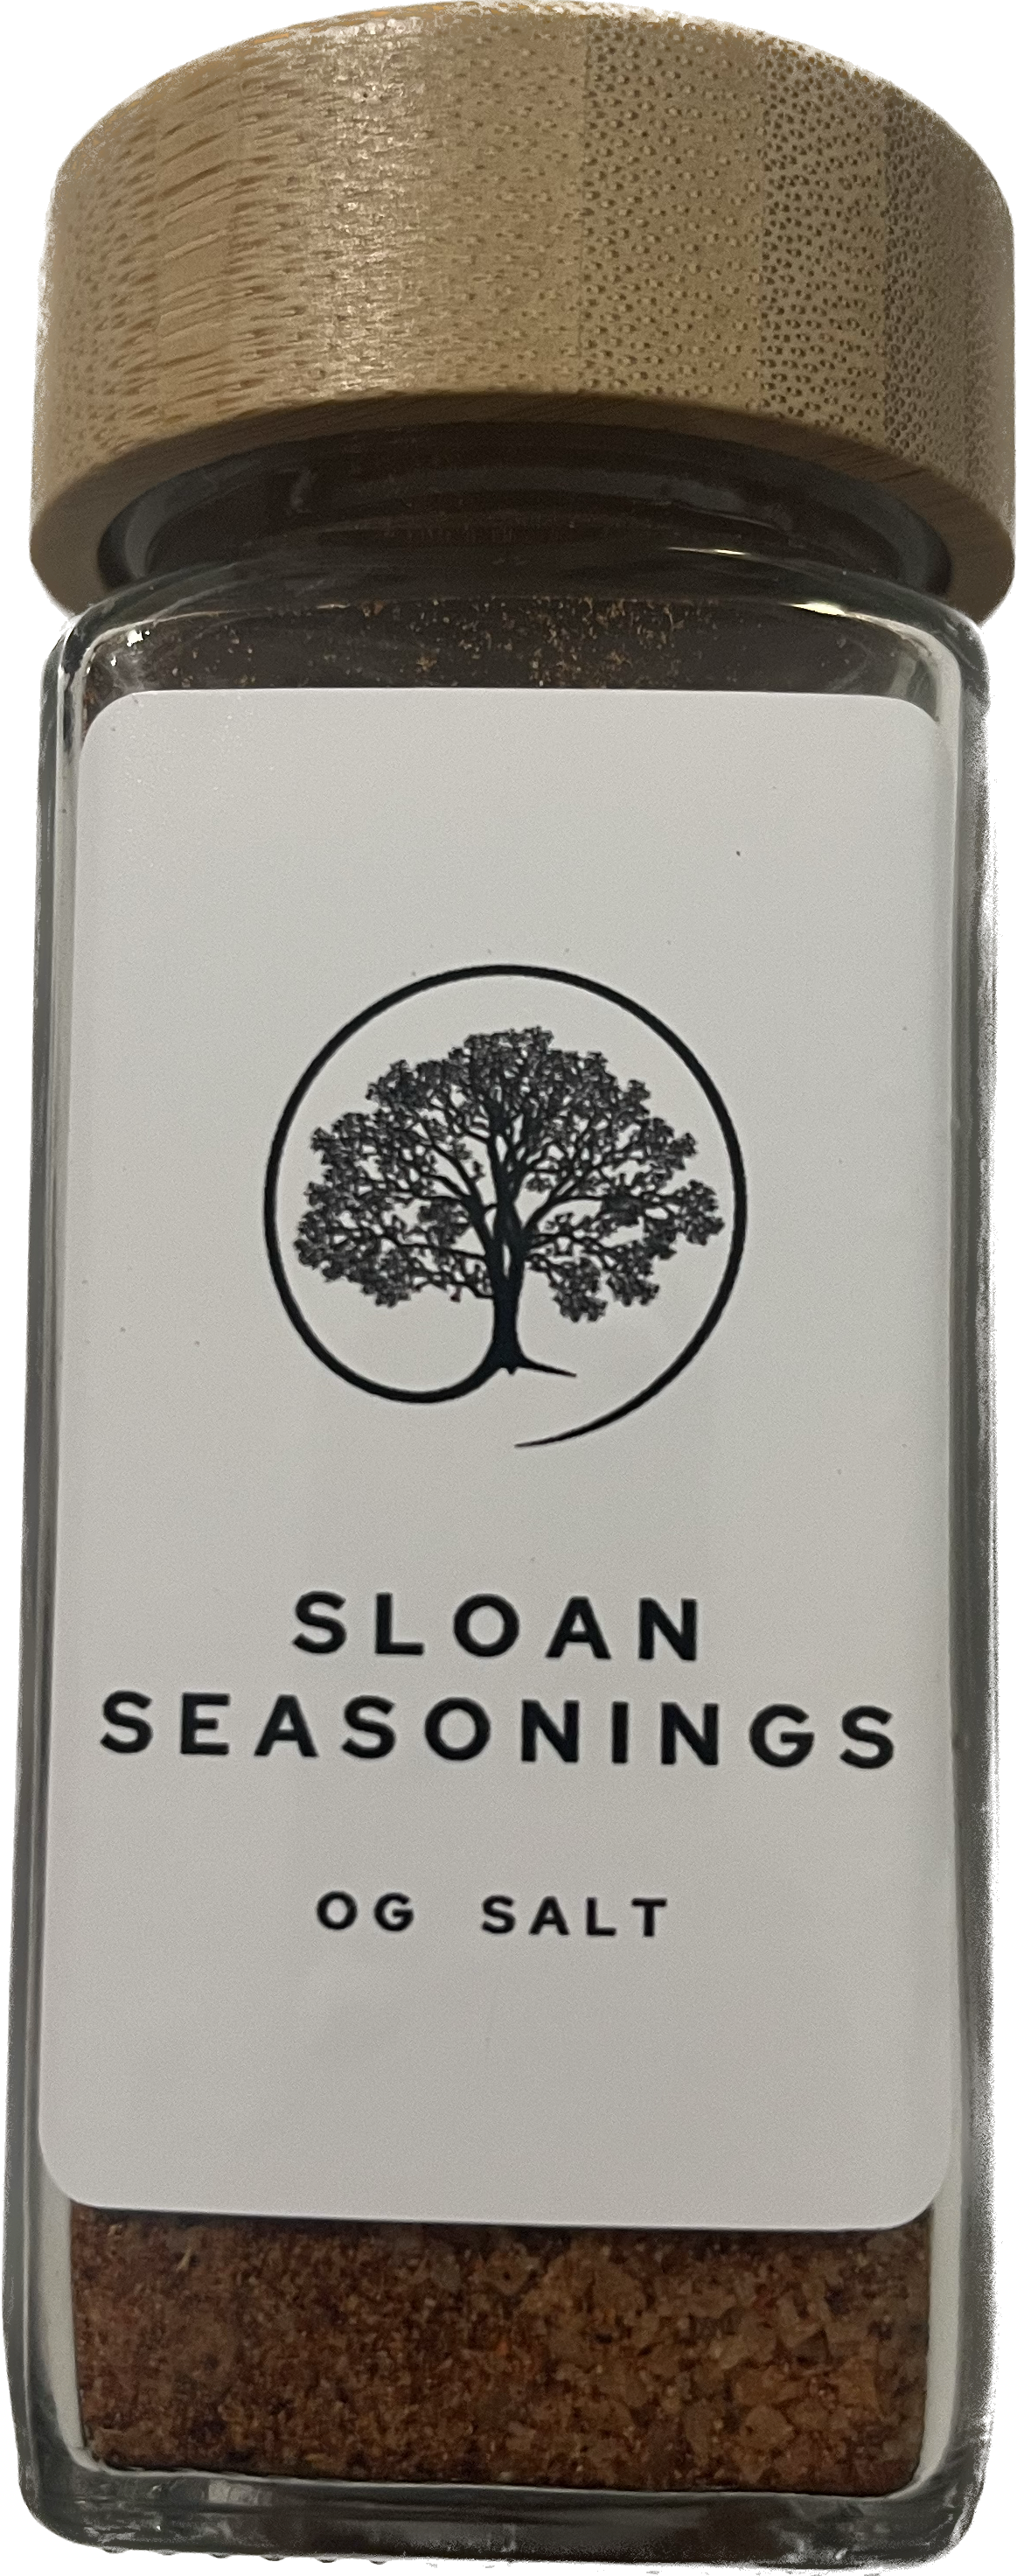 Sloan Seasoning Salt 3.6 oz Glass jar with Bamboo Lid